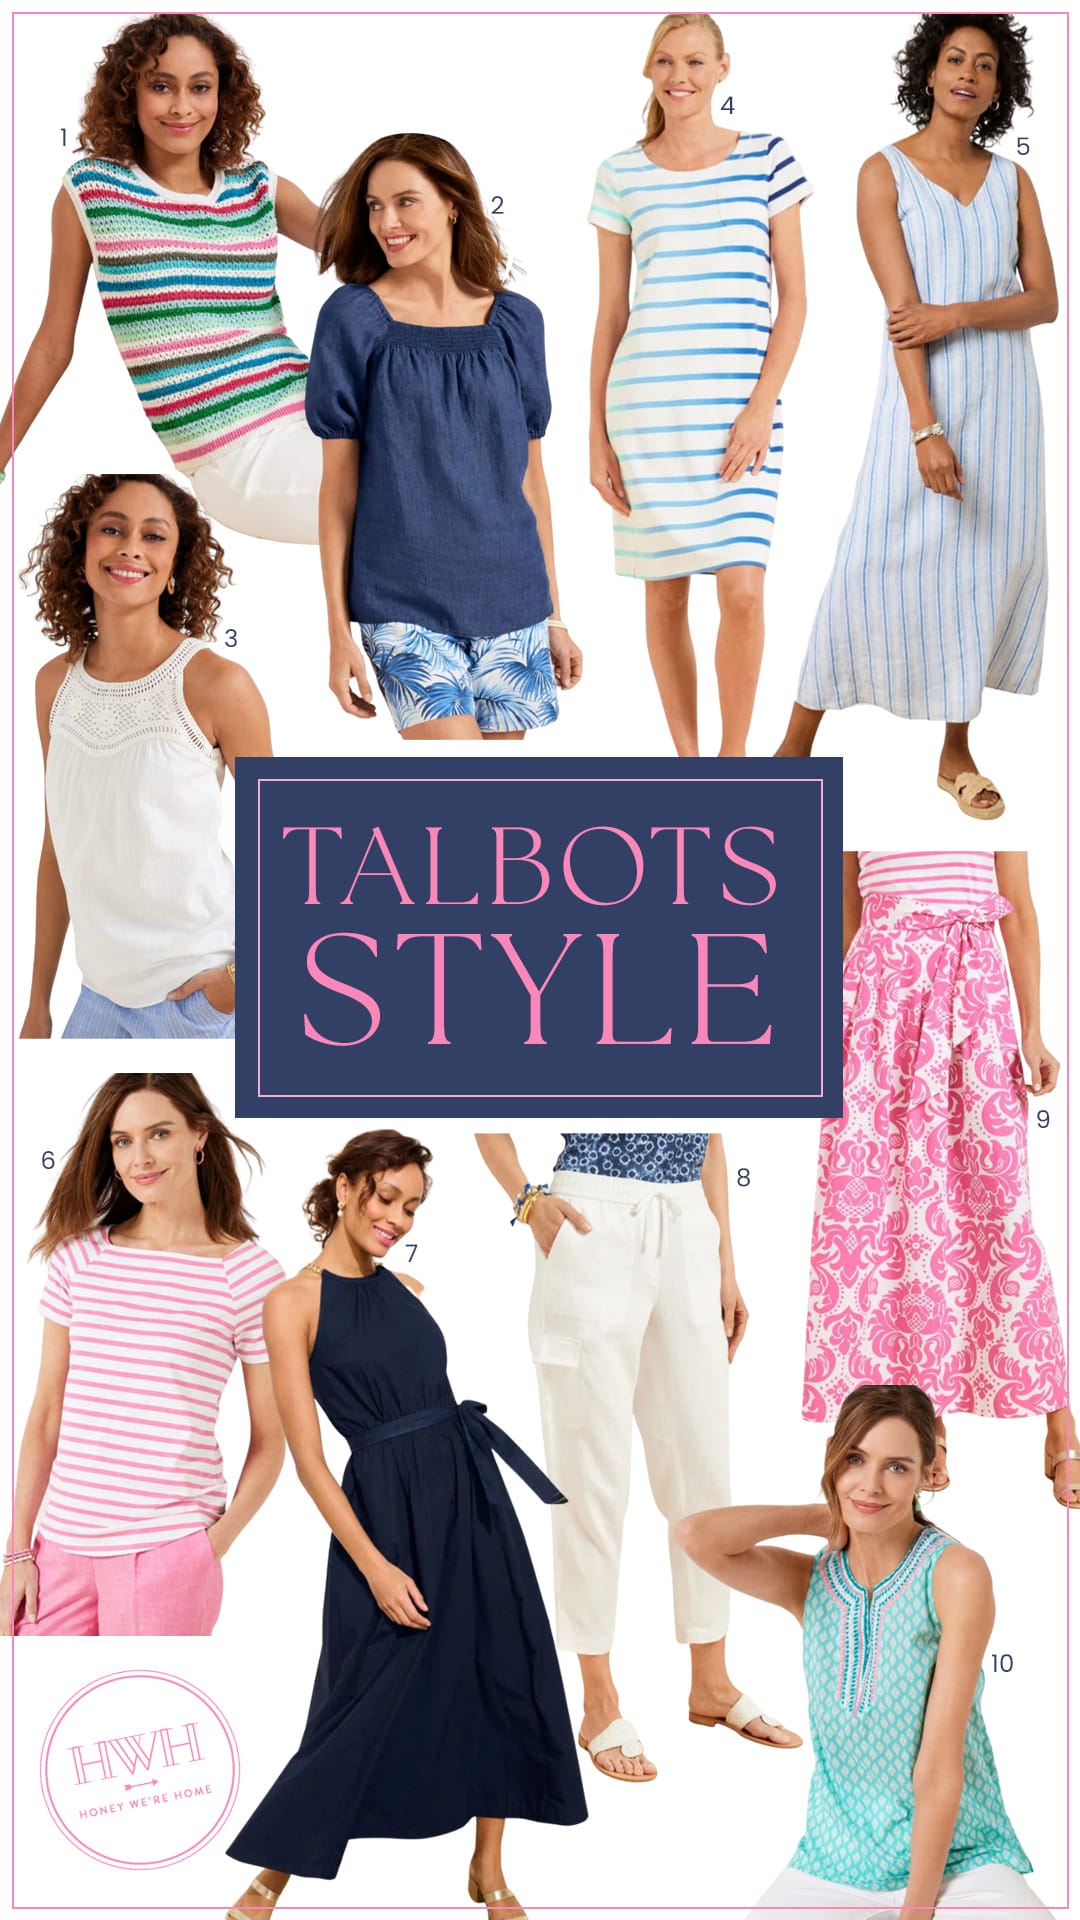 Talbots summer fun clothing continues